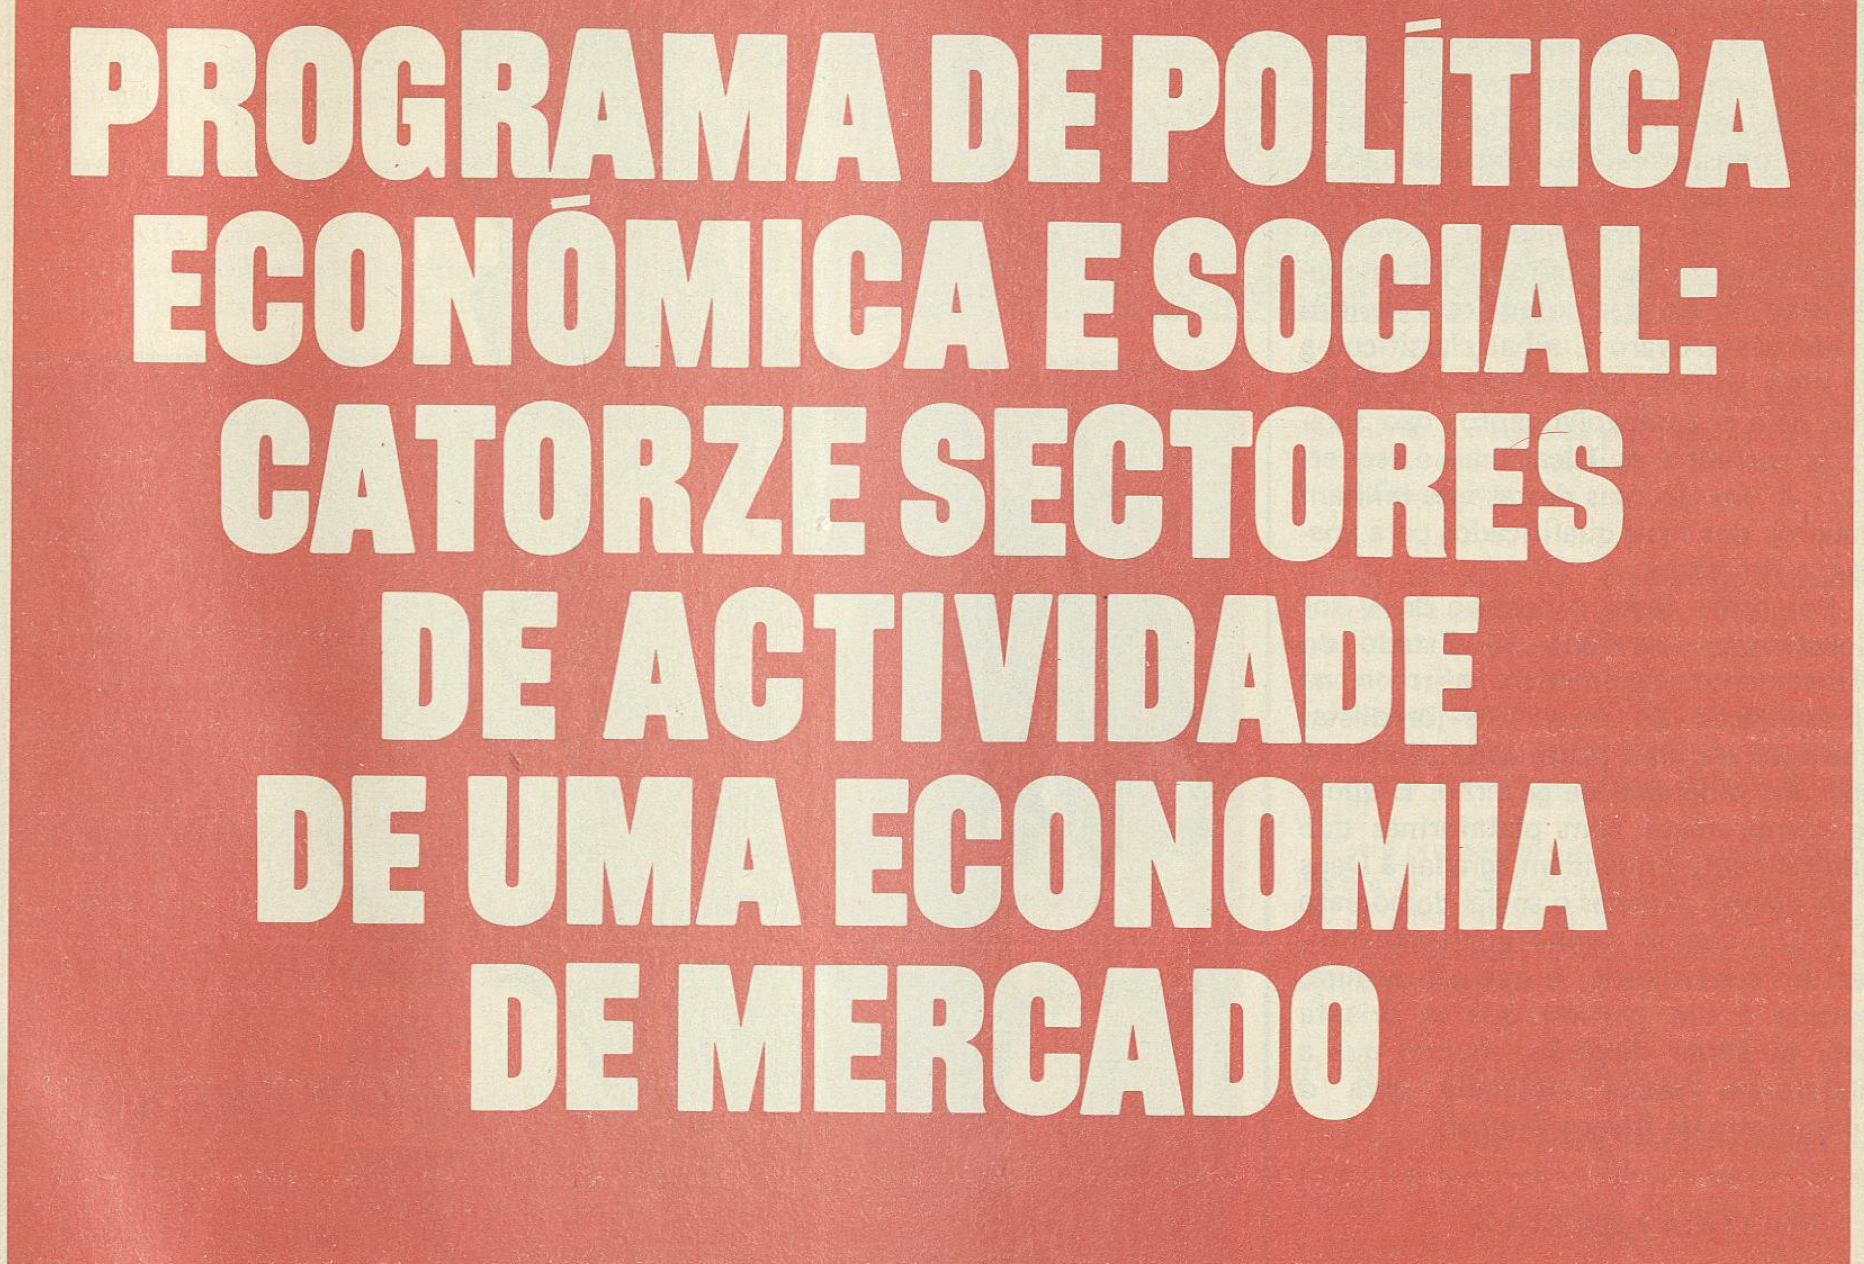 "Programa de política económica e social: Catorze sectores de actividade de uma economia de mercado"